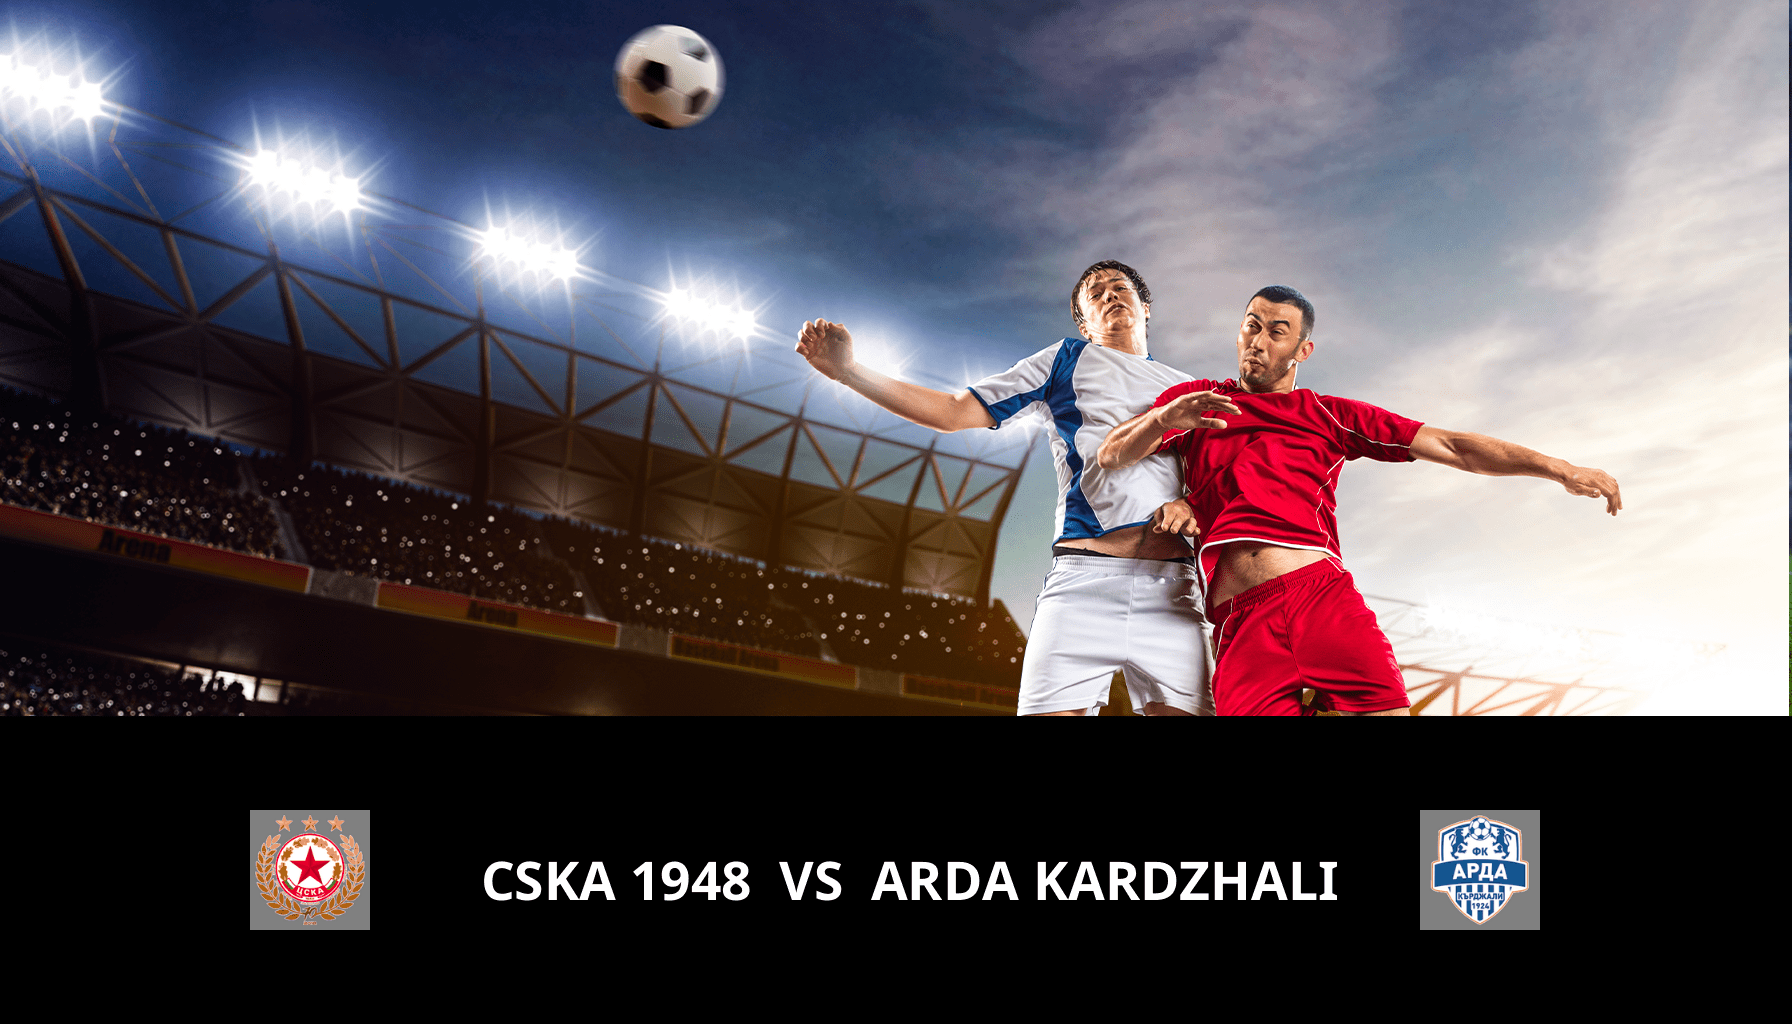 Previsione per CSKA 1948 VS Arda Kardzhali il 29/04/2024 Analysis of the match